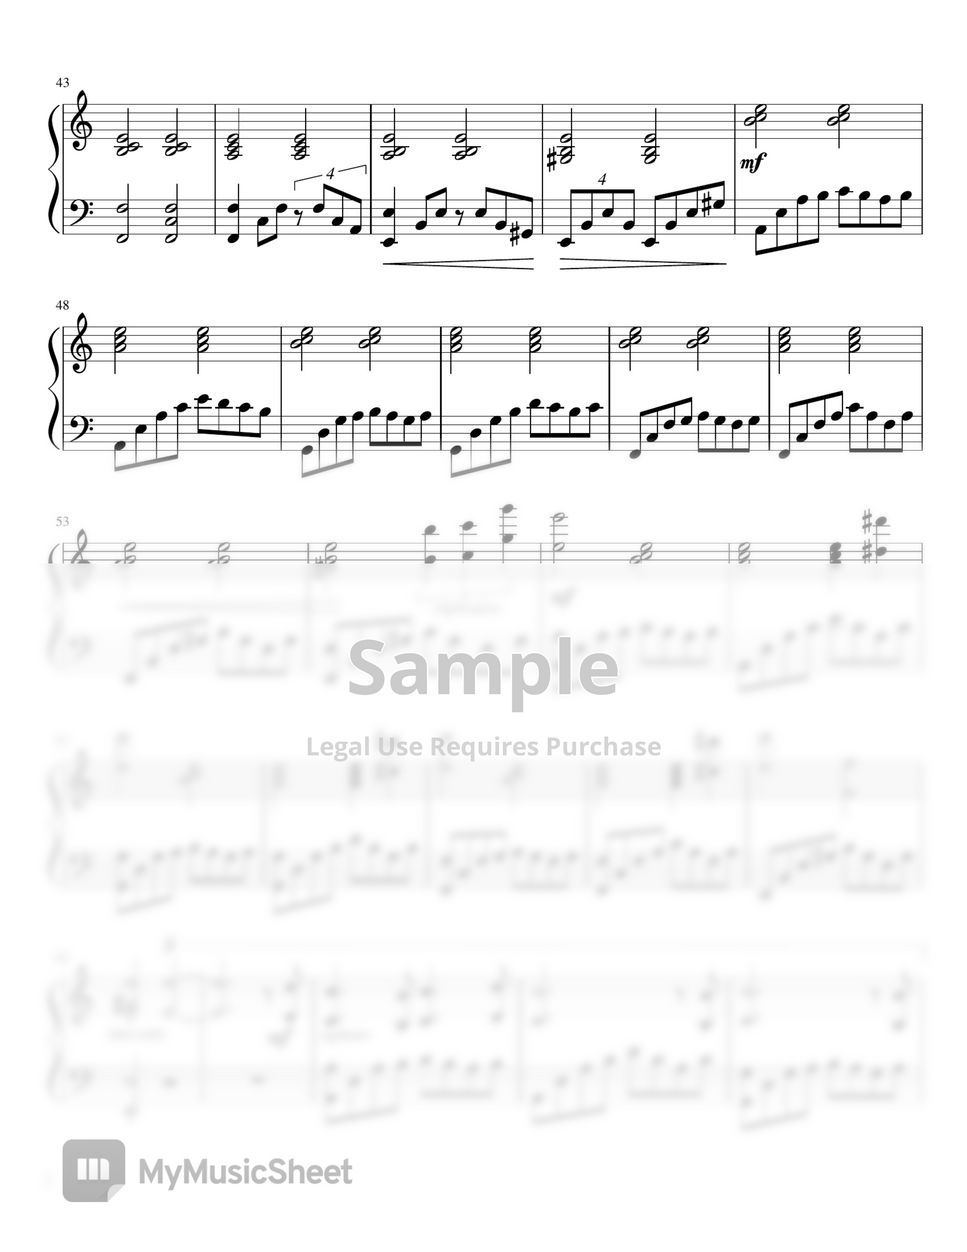 Shiro Sagisu - Bleach Sad Soundtrack Piano Medley (Part 1) by PianoDeuss